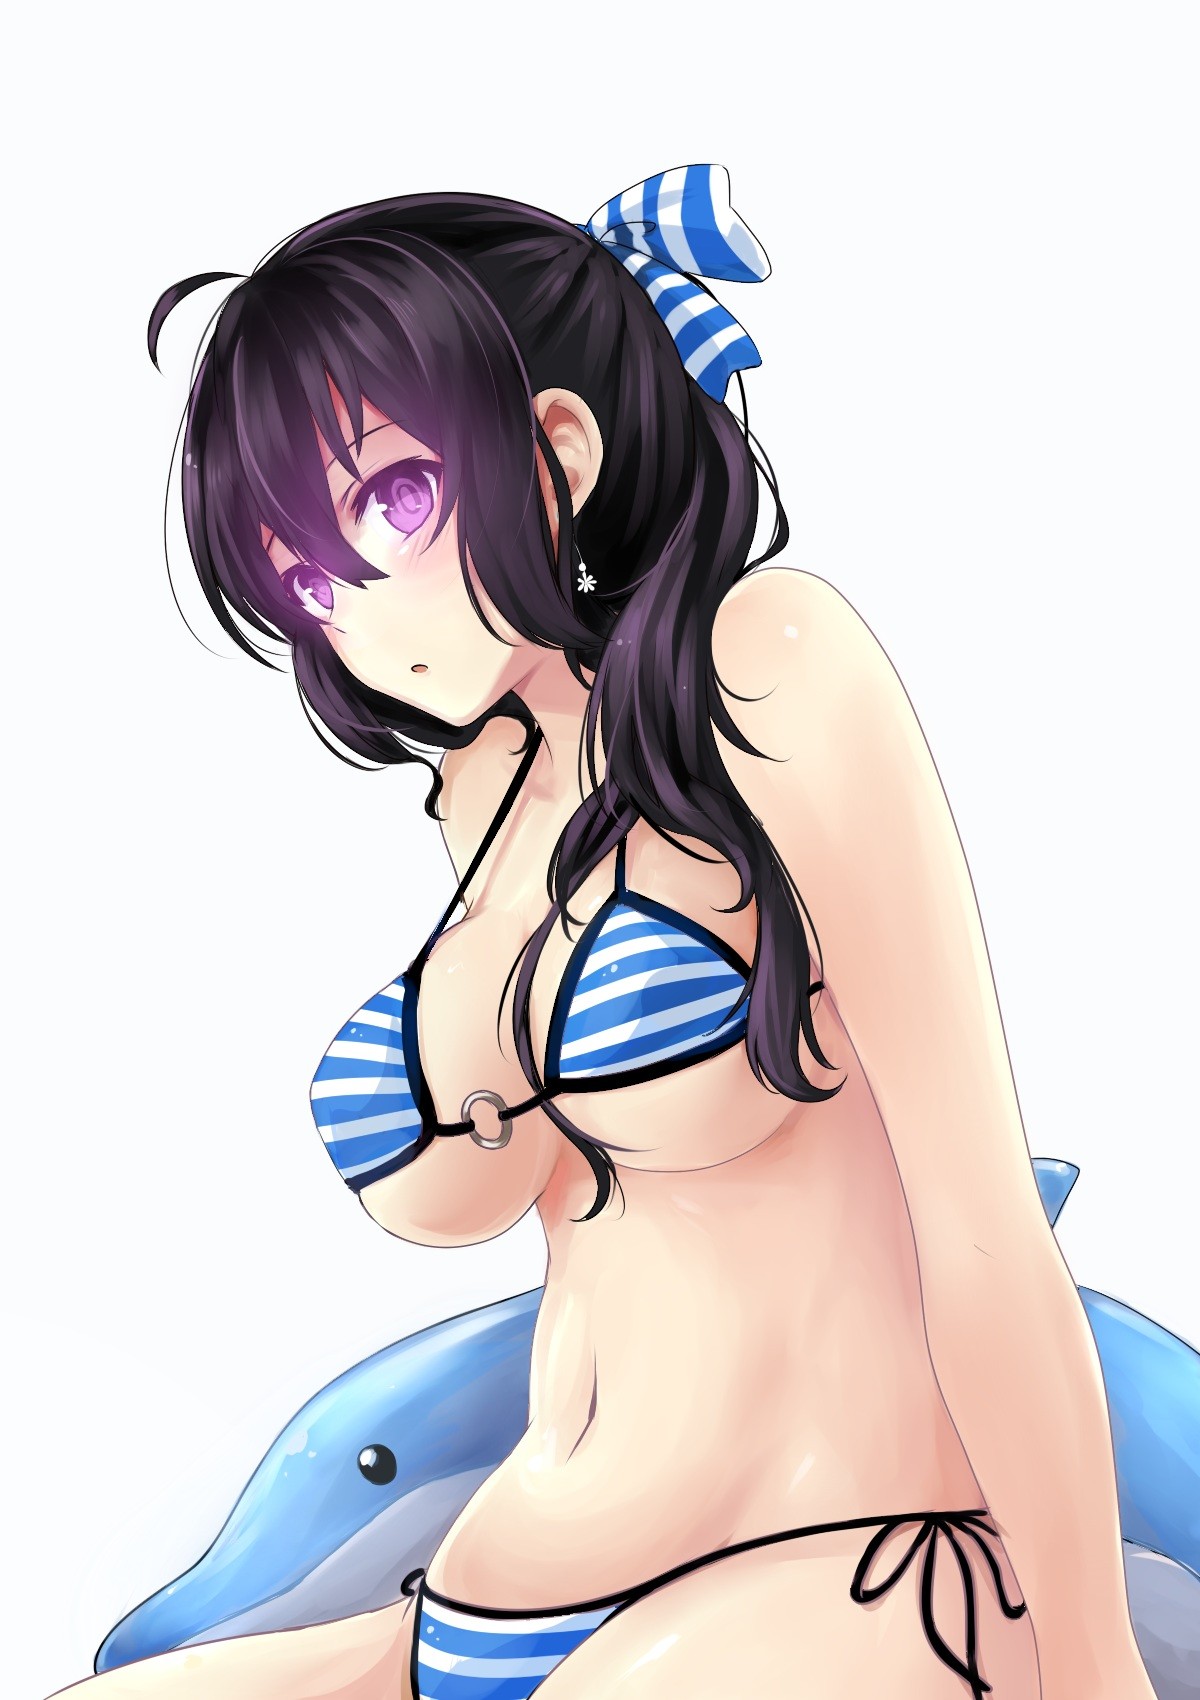 Anime 1200x1700 Miyaura Sanshio bikini cleavage underboob purple eyes long hair glowing eyes dark hair big boobs anime girls